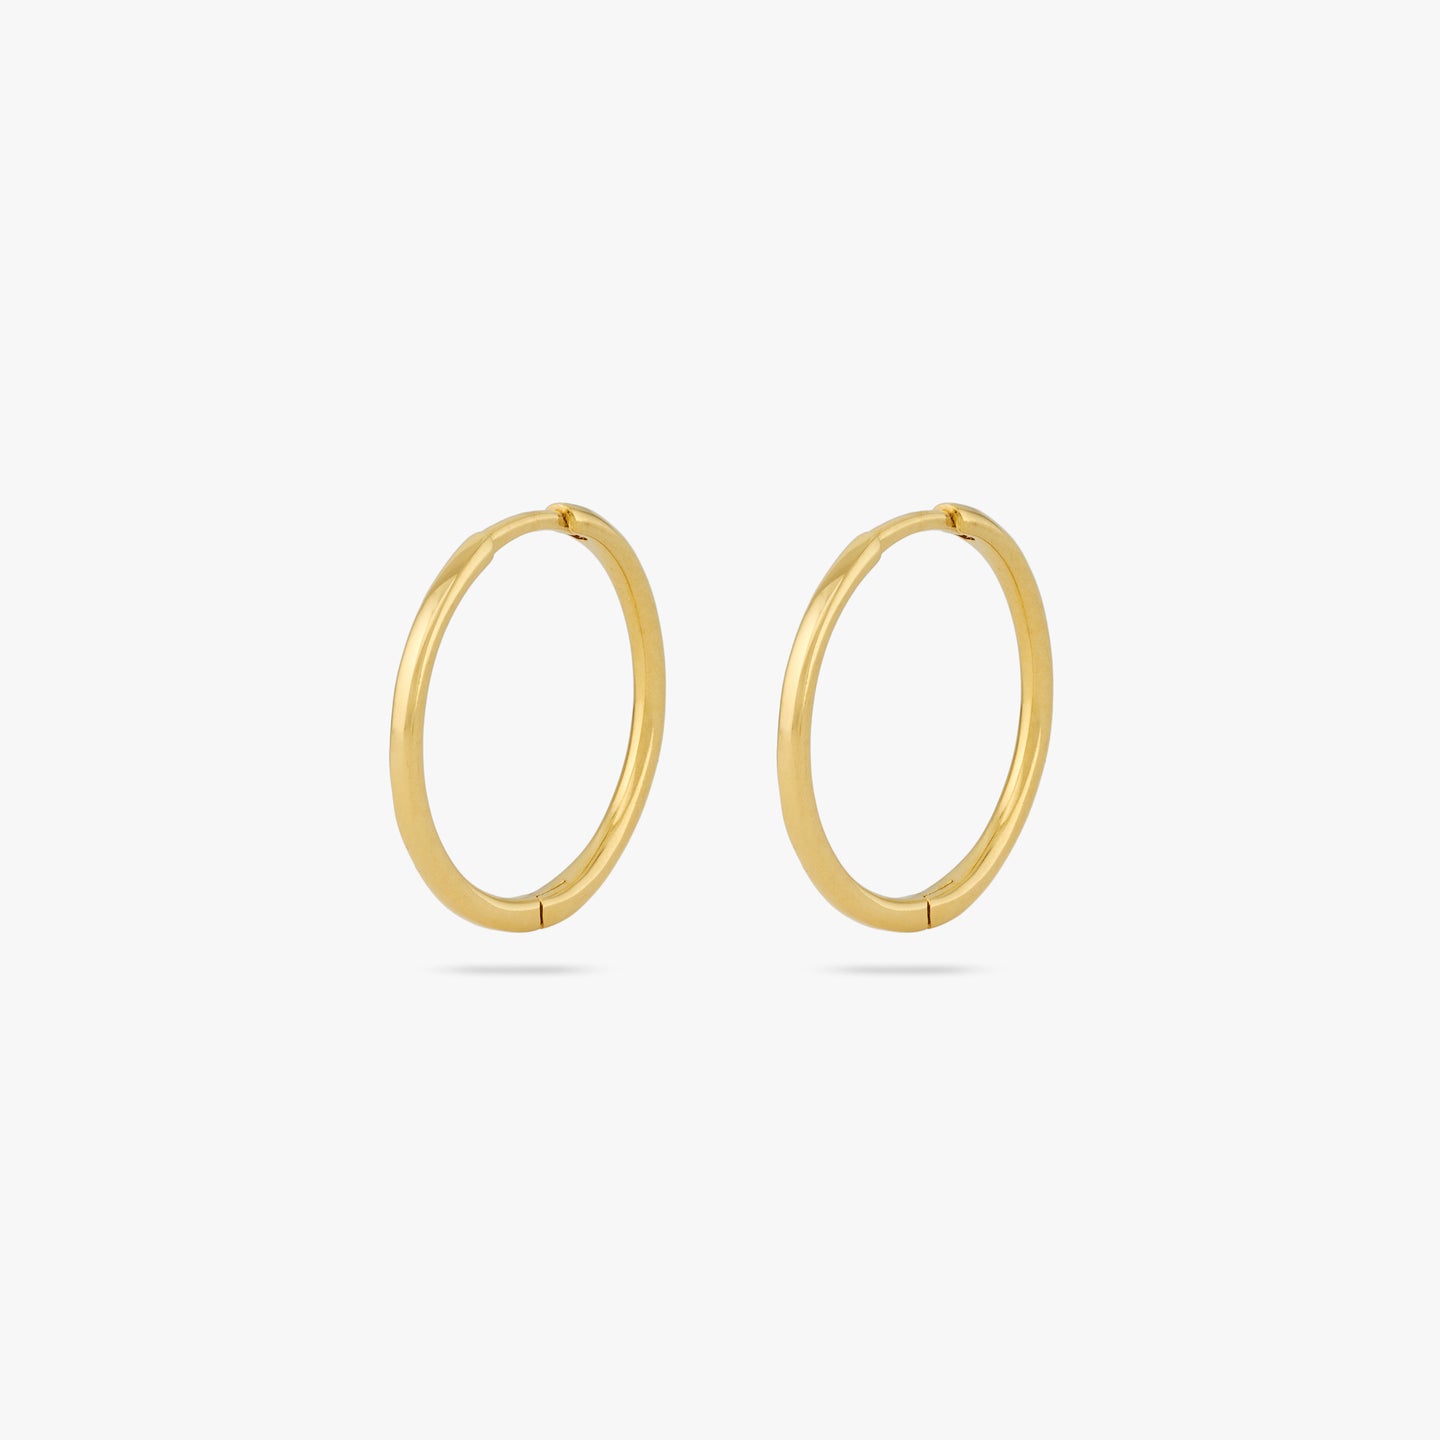 Pair of medium sized slim simple gold hoops. [pair] color:null|gold